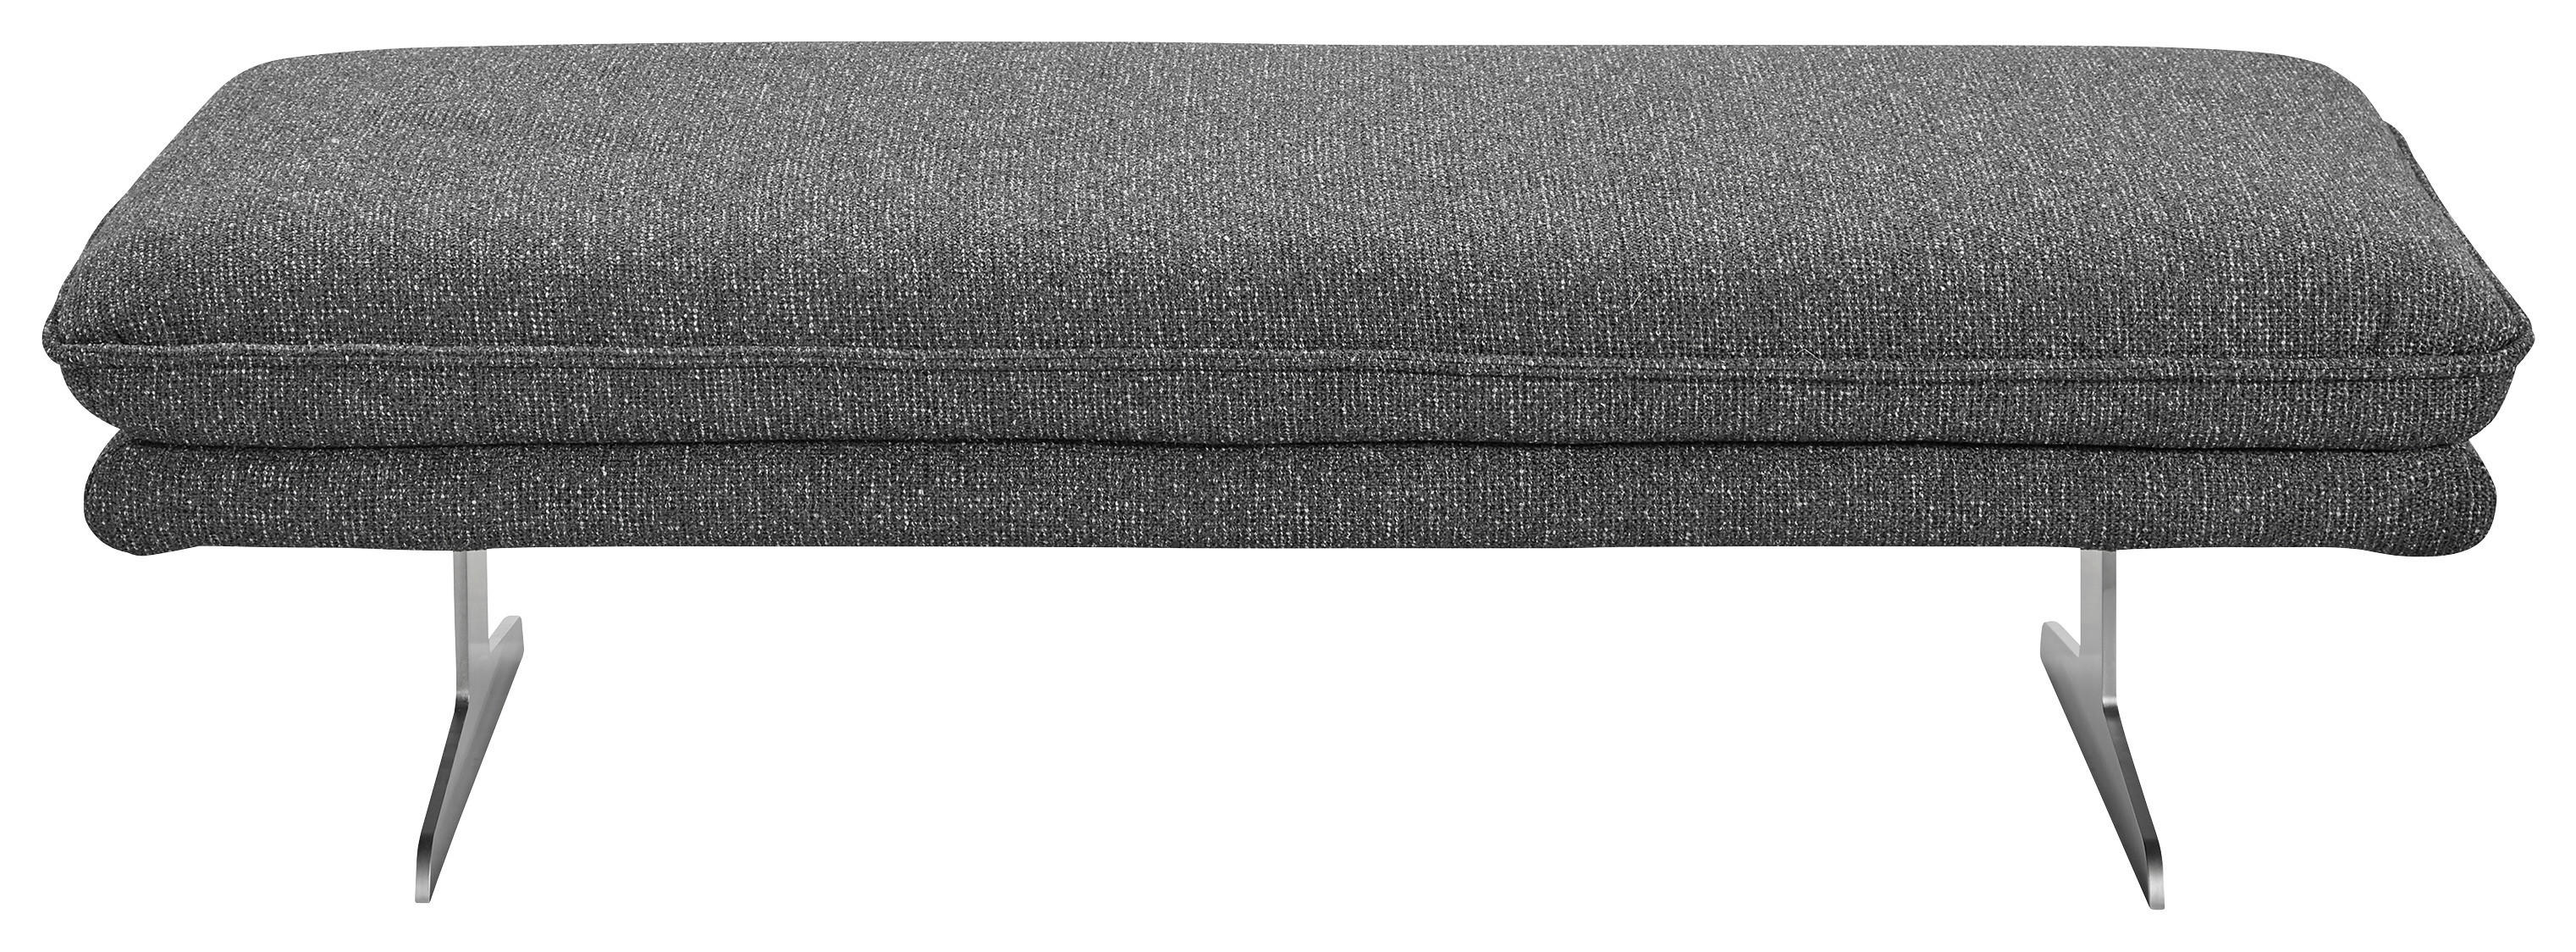 HOCKER Webstoff Anthrazit  - Chromfarben/Anthrazit, Design, Textil (145/43/71cm) - Chilliano